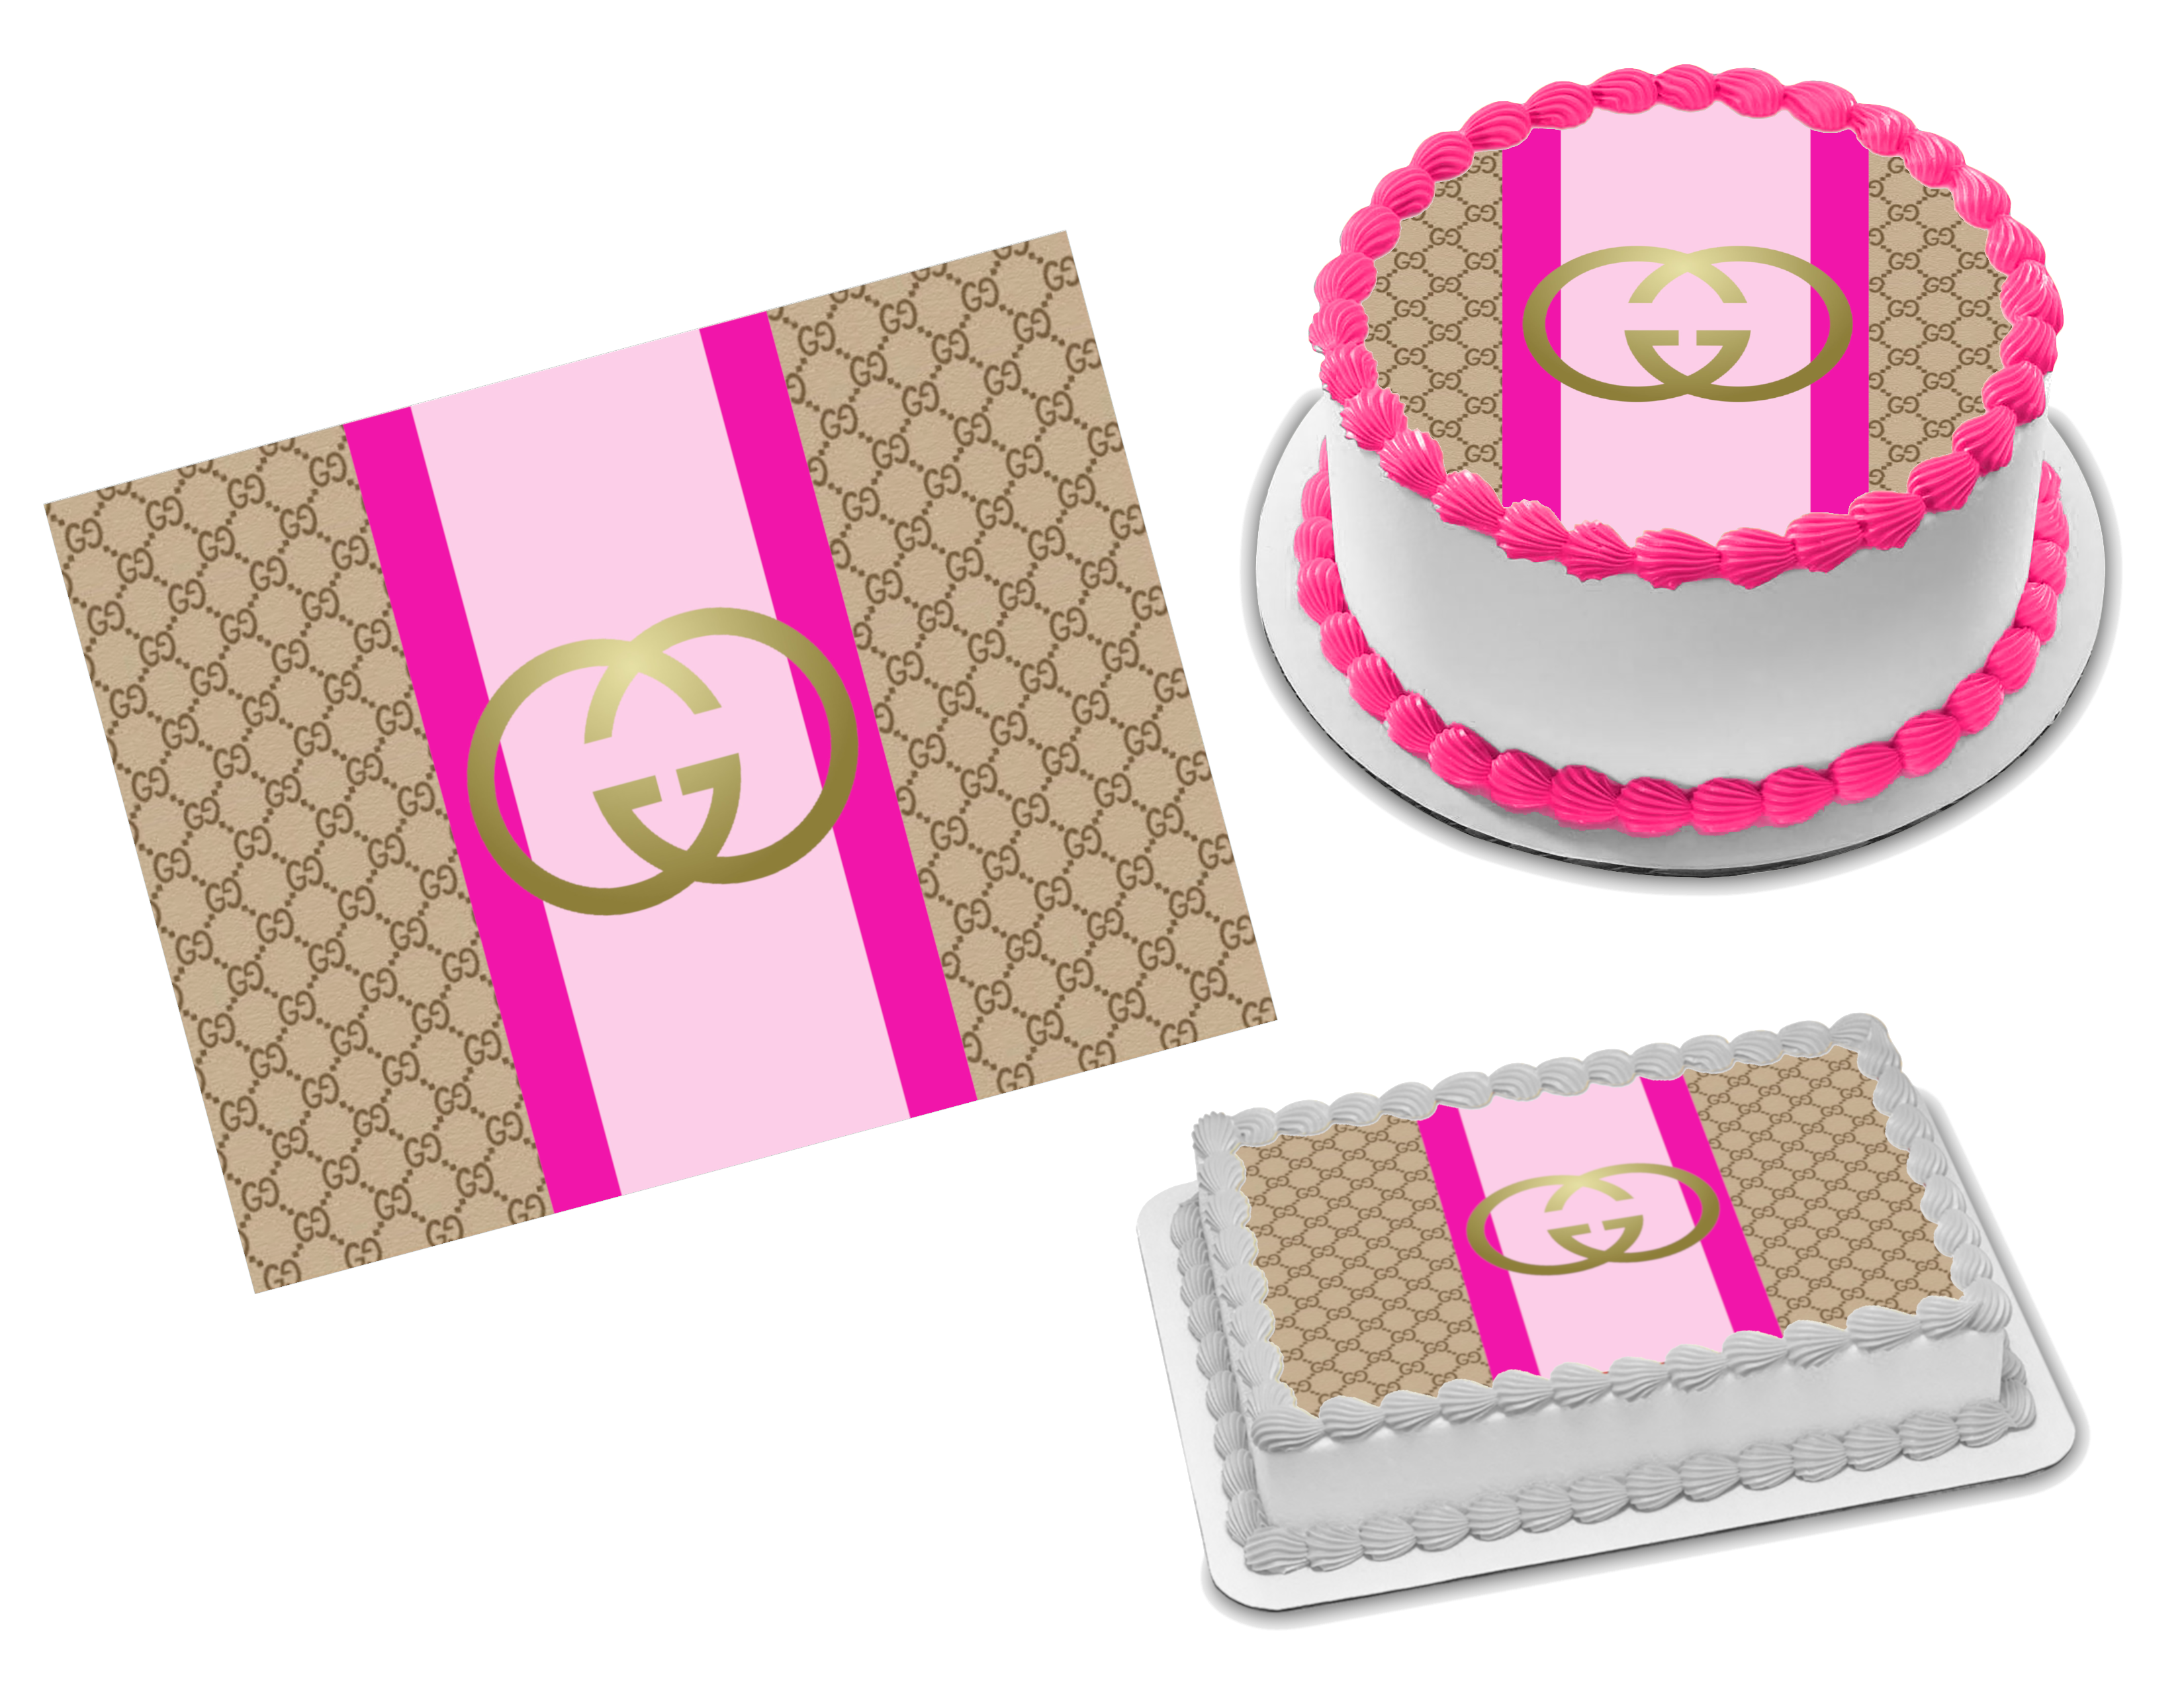 Gucci cake  Fruit cake design, Gucci cake, Birthday cakes for men